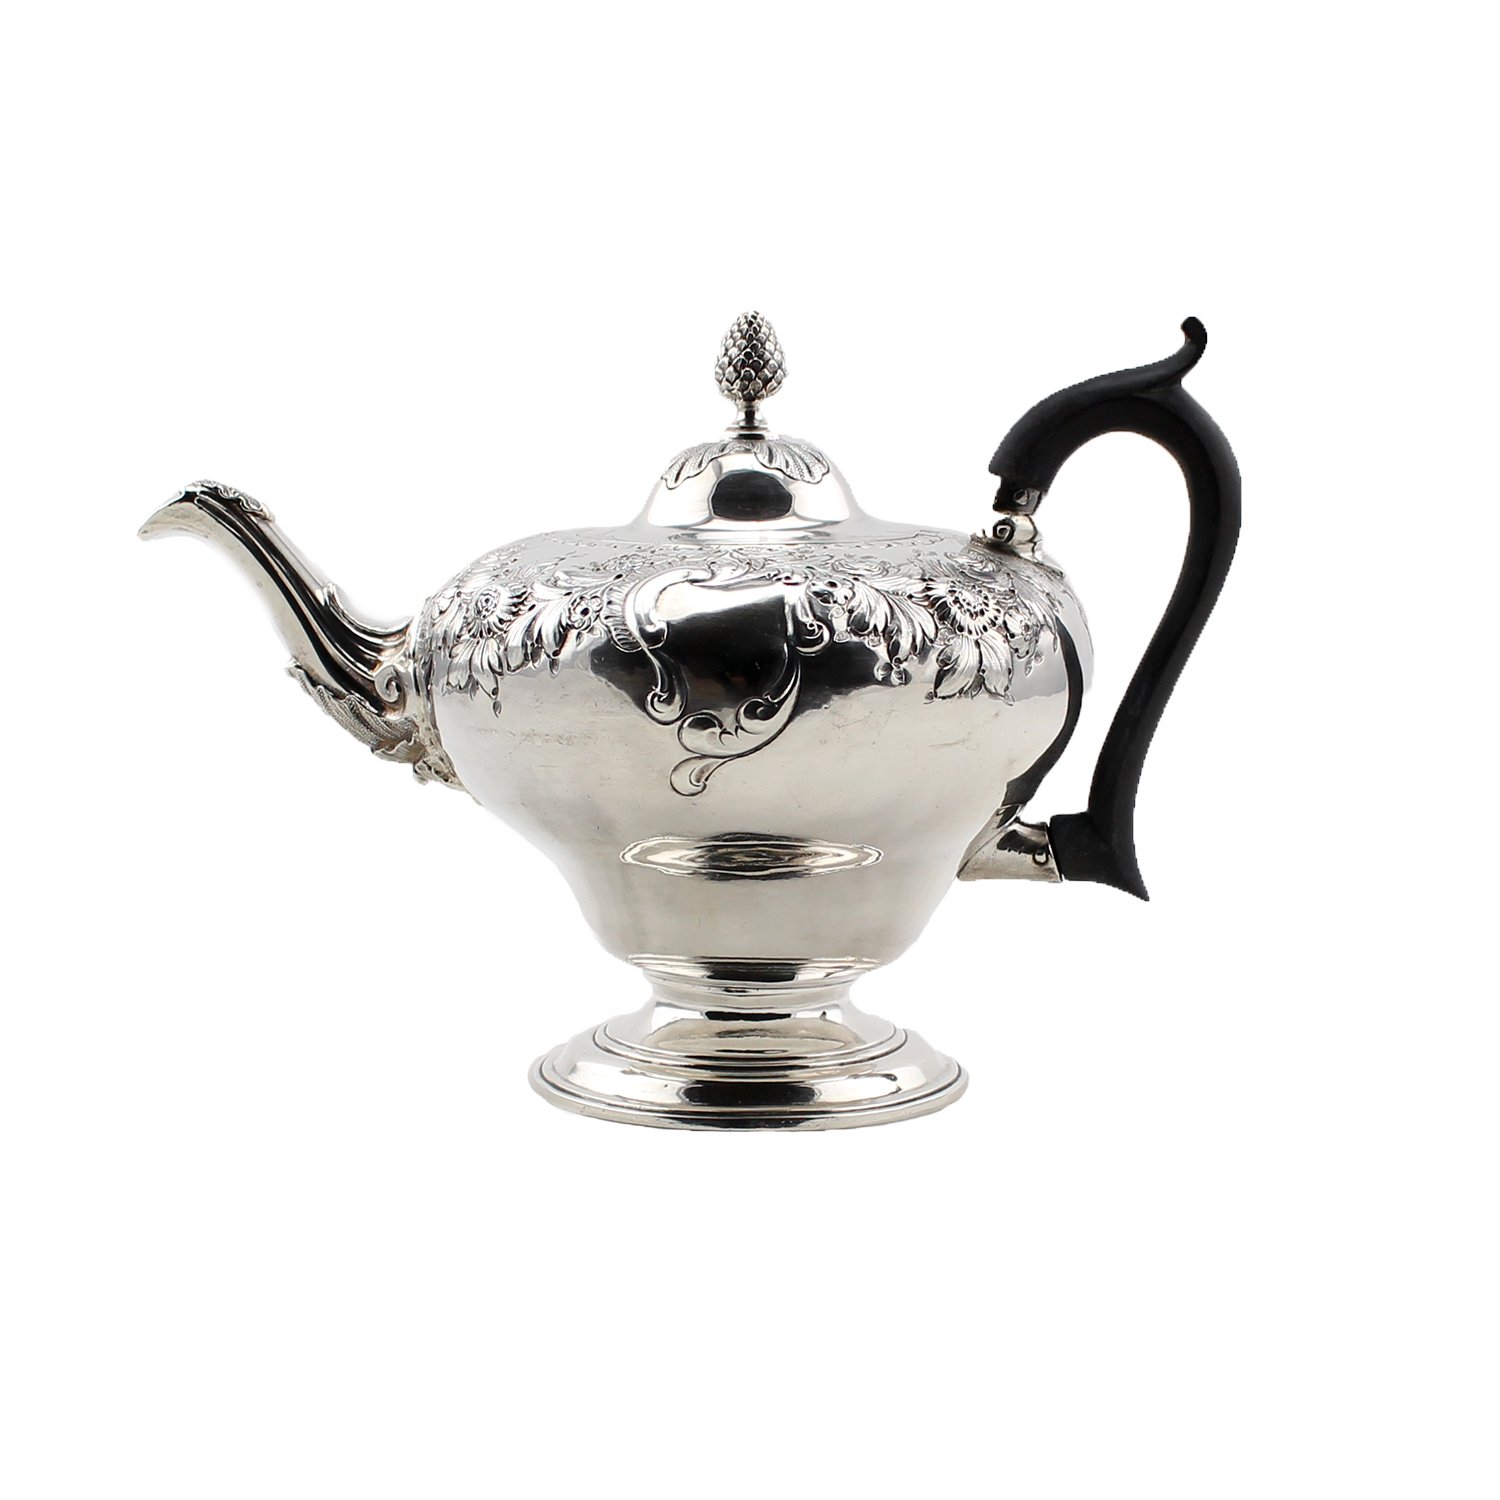 Georgian Sterling Silver Teapot with Ebony Handle, Charles Fox II, London 1824